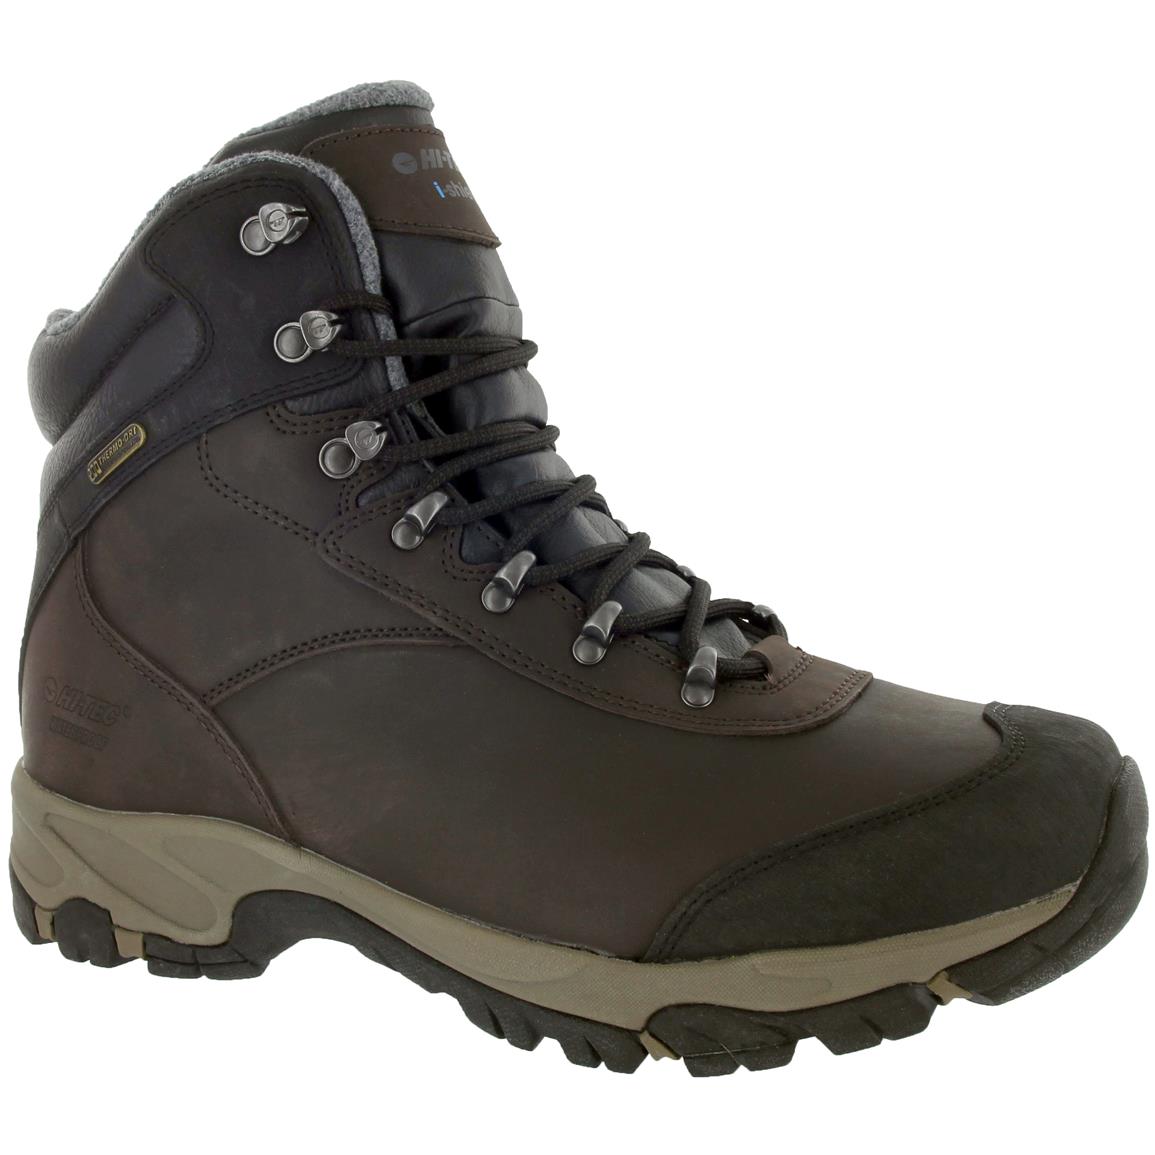 Hi-Tec Altitude V 200 i Insulated Men's Hiking Boots, Waterproof ...